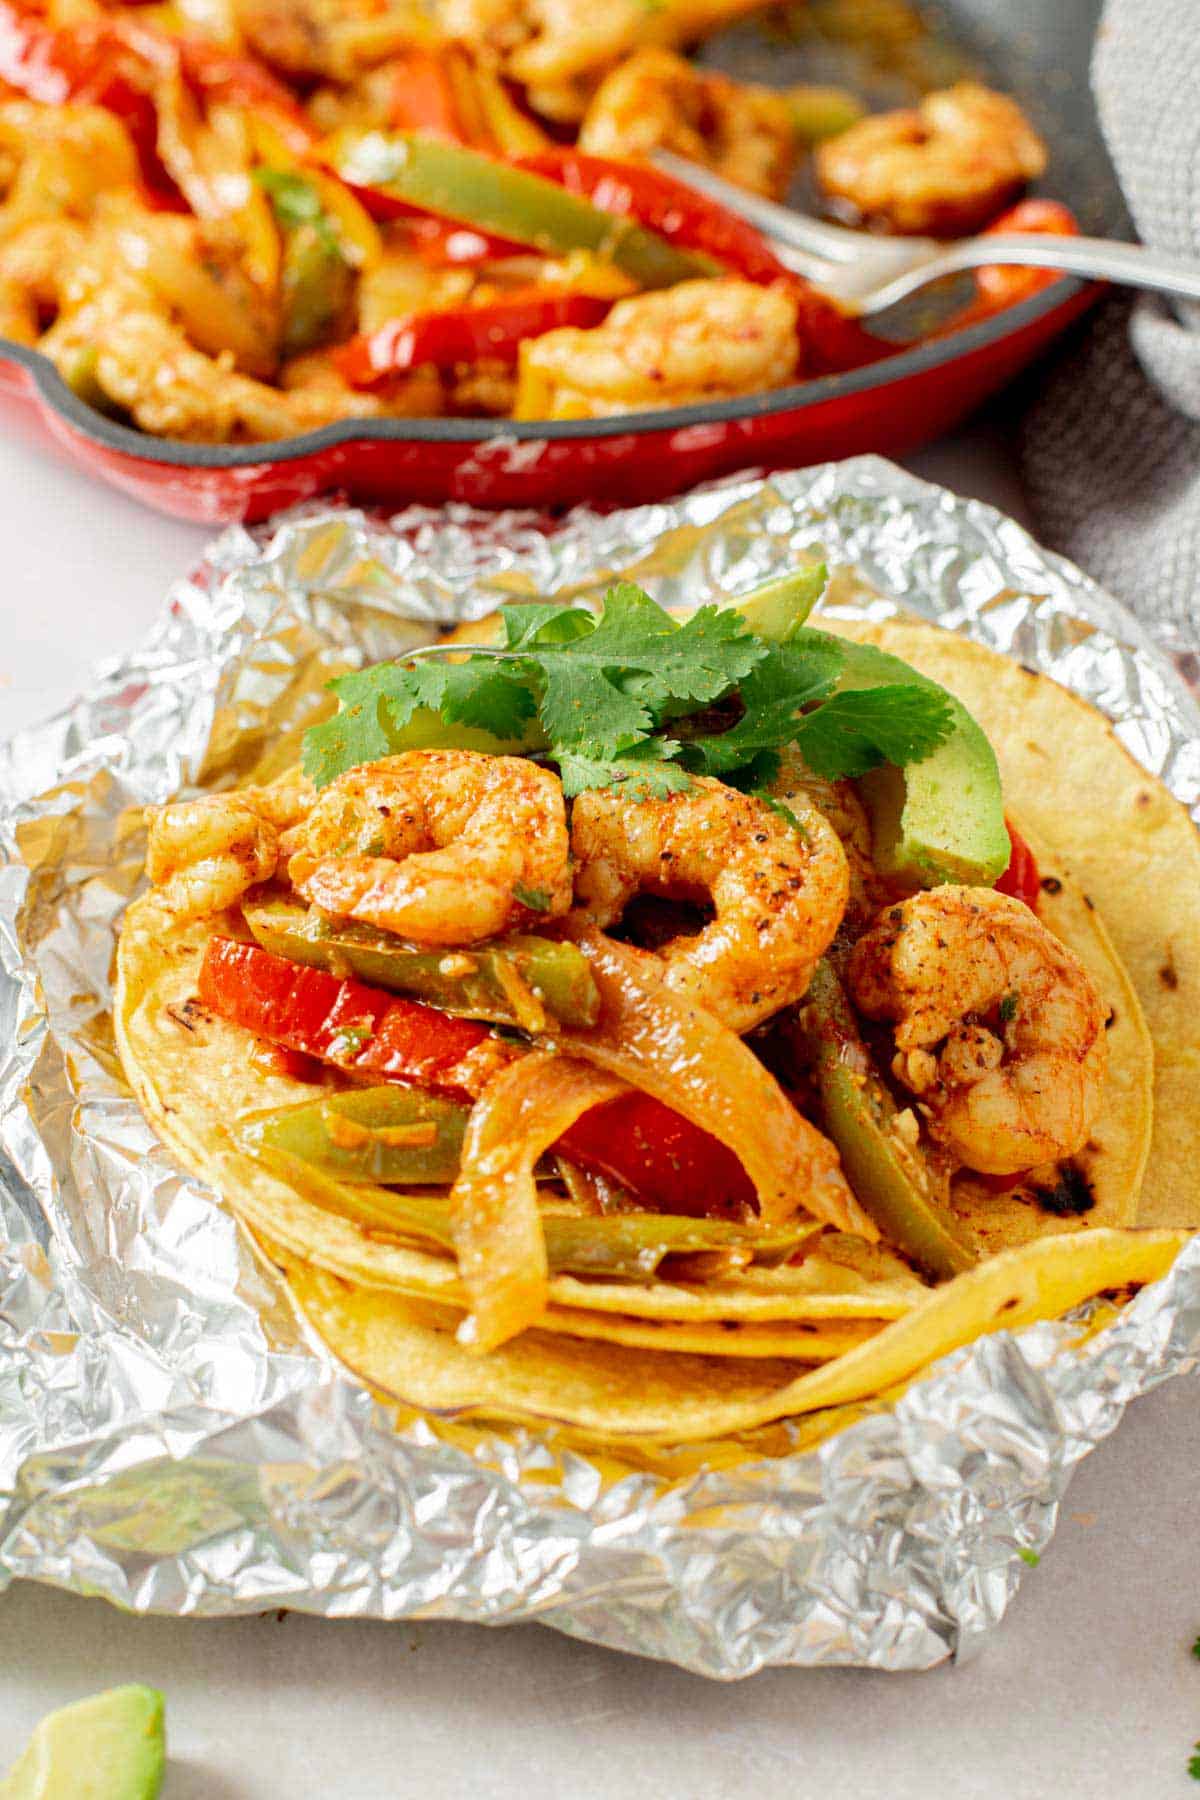 shrimp fajita with vegetables served in a corn tortilla ona foil